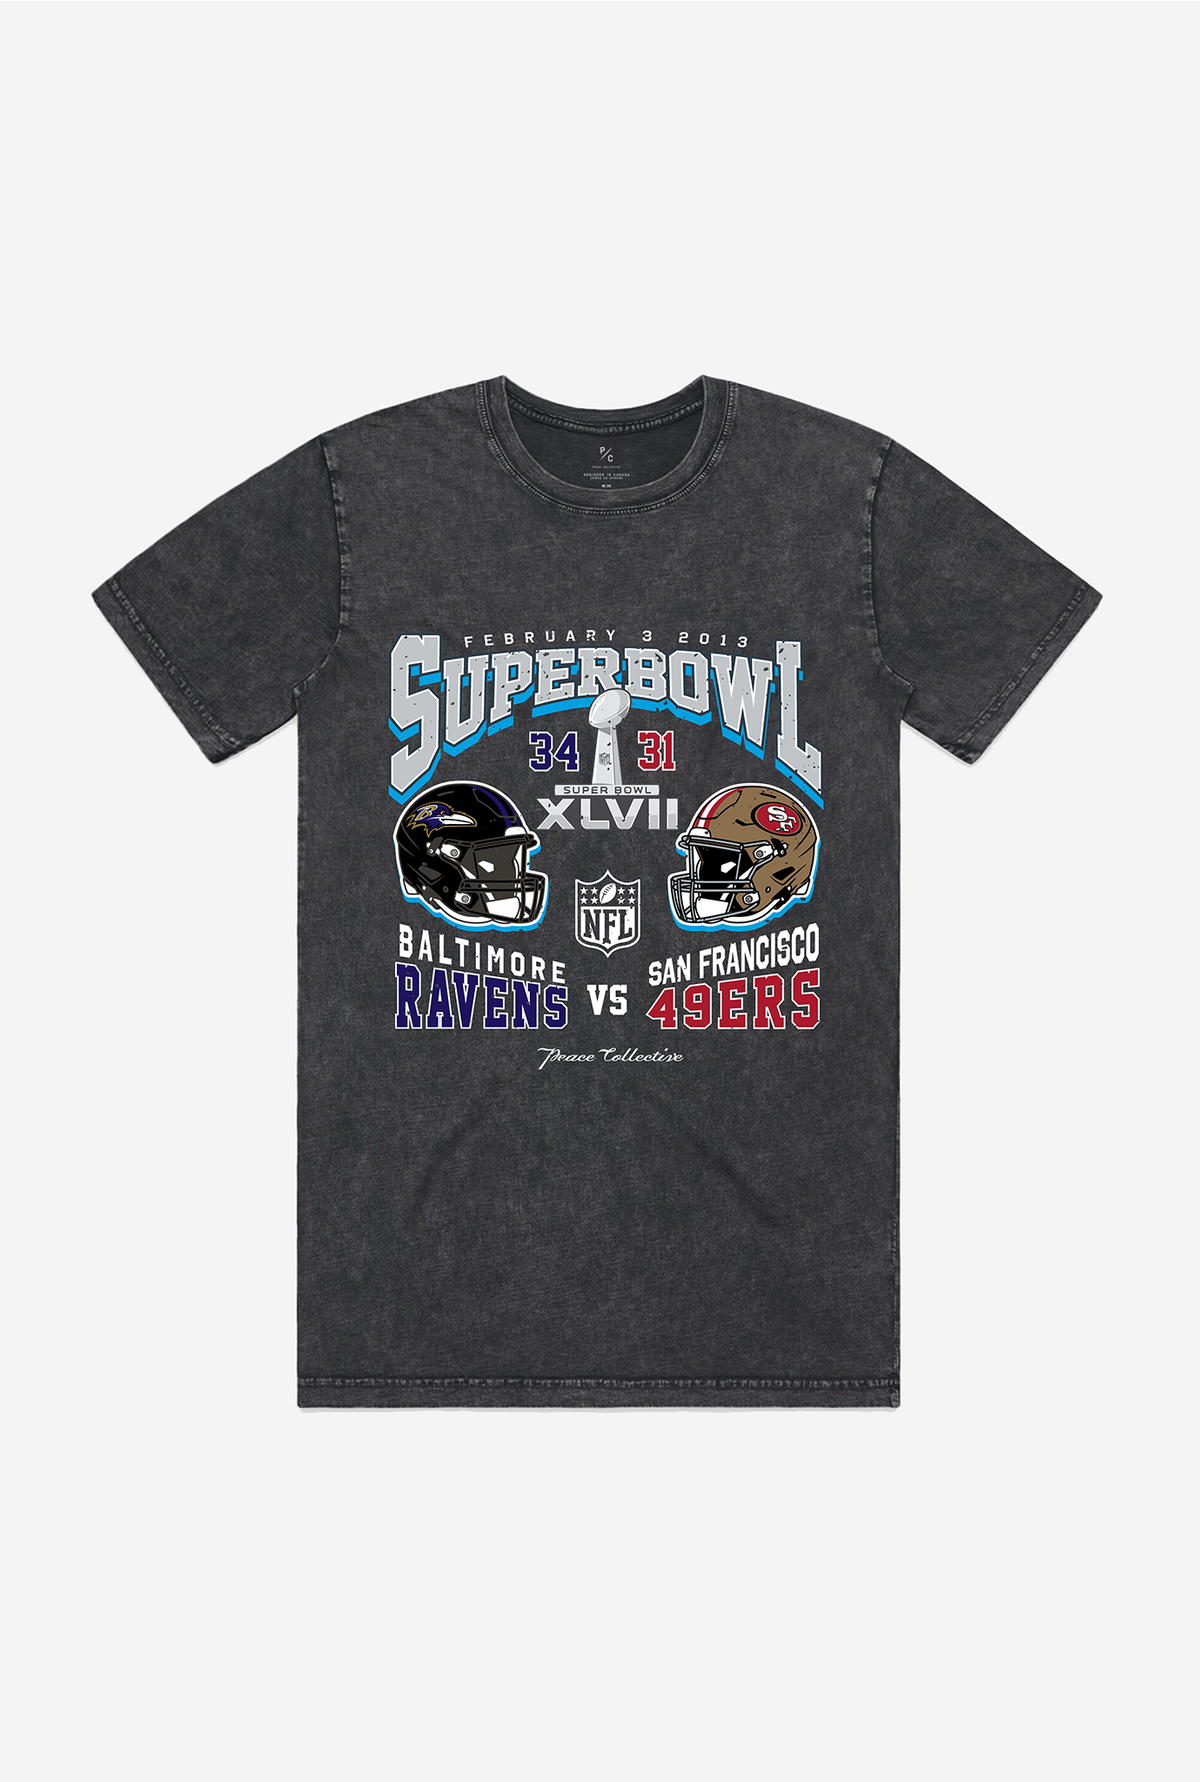 Super Bowl XLVII: Baltimore Ravens vs San Francisco 49ers Stonewashed T-Shirt - Black